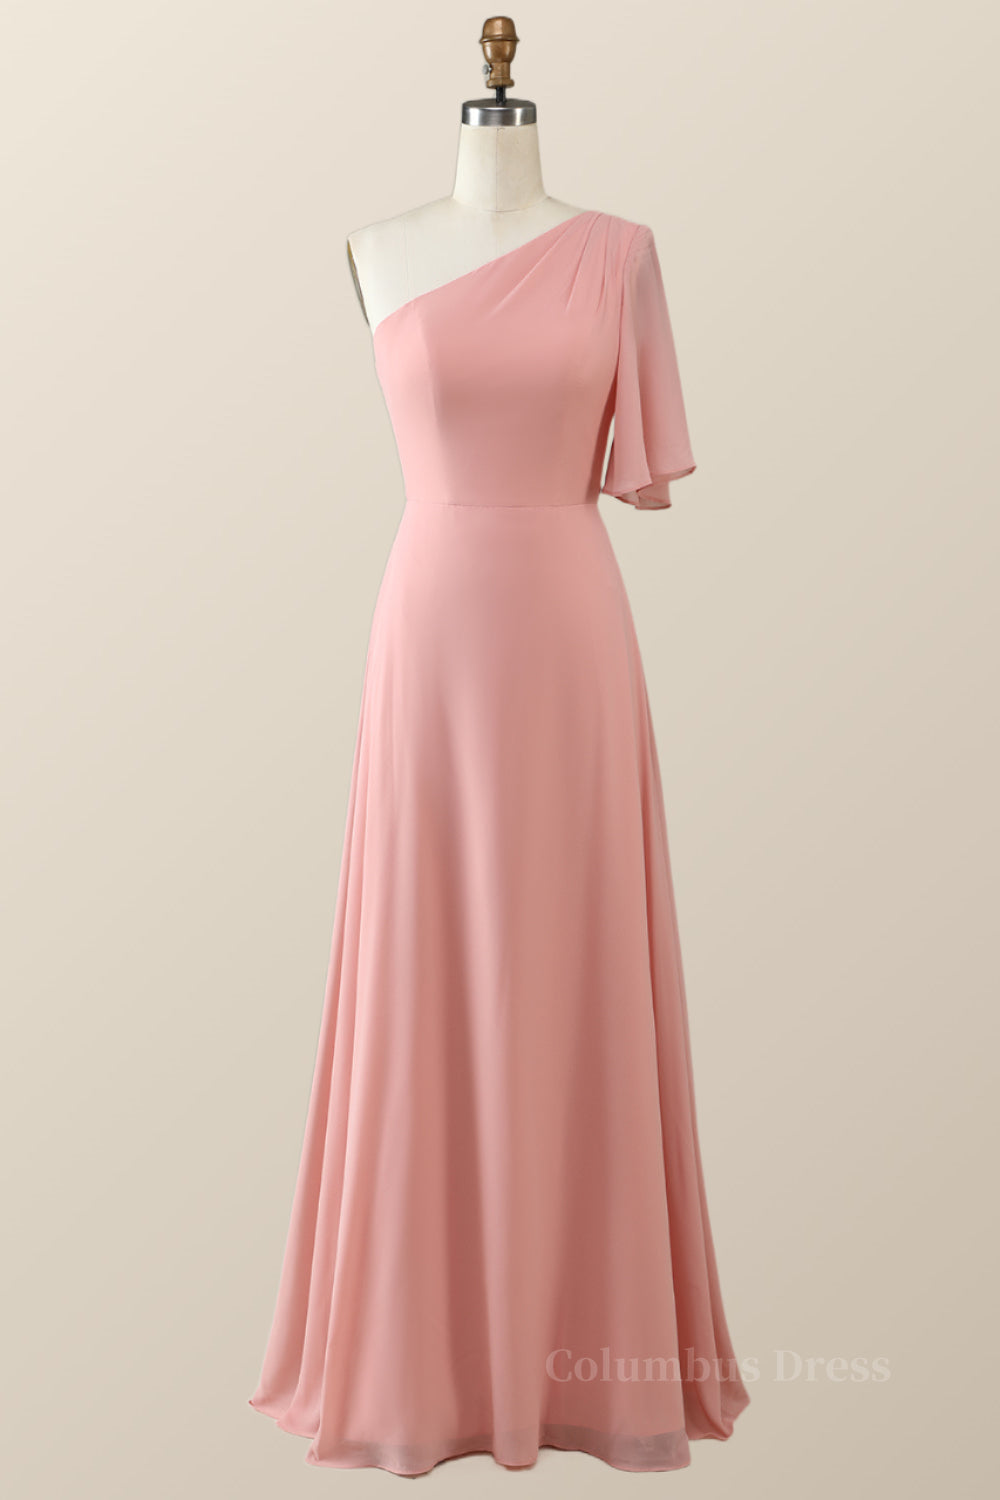 Prom Dresses Guide, One Shoulder Blush Pink Chiffon Long Bridesmaid Dress